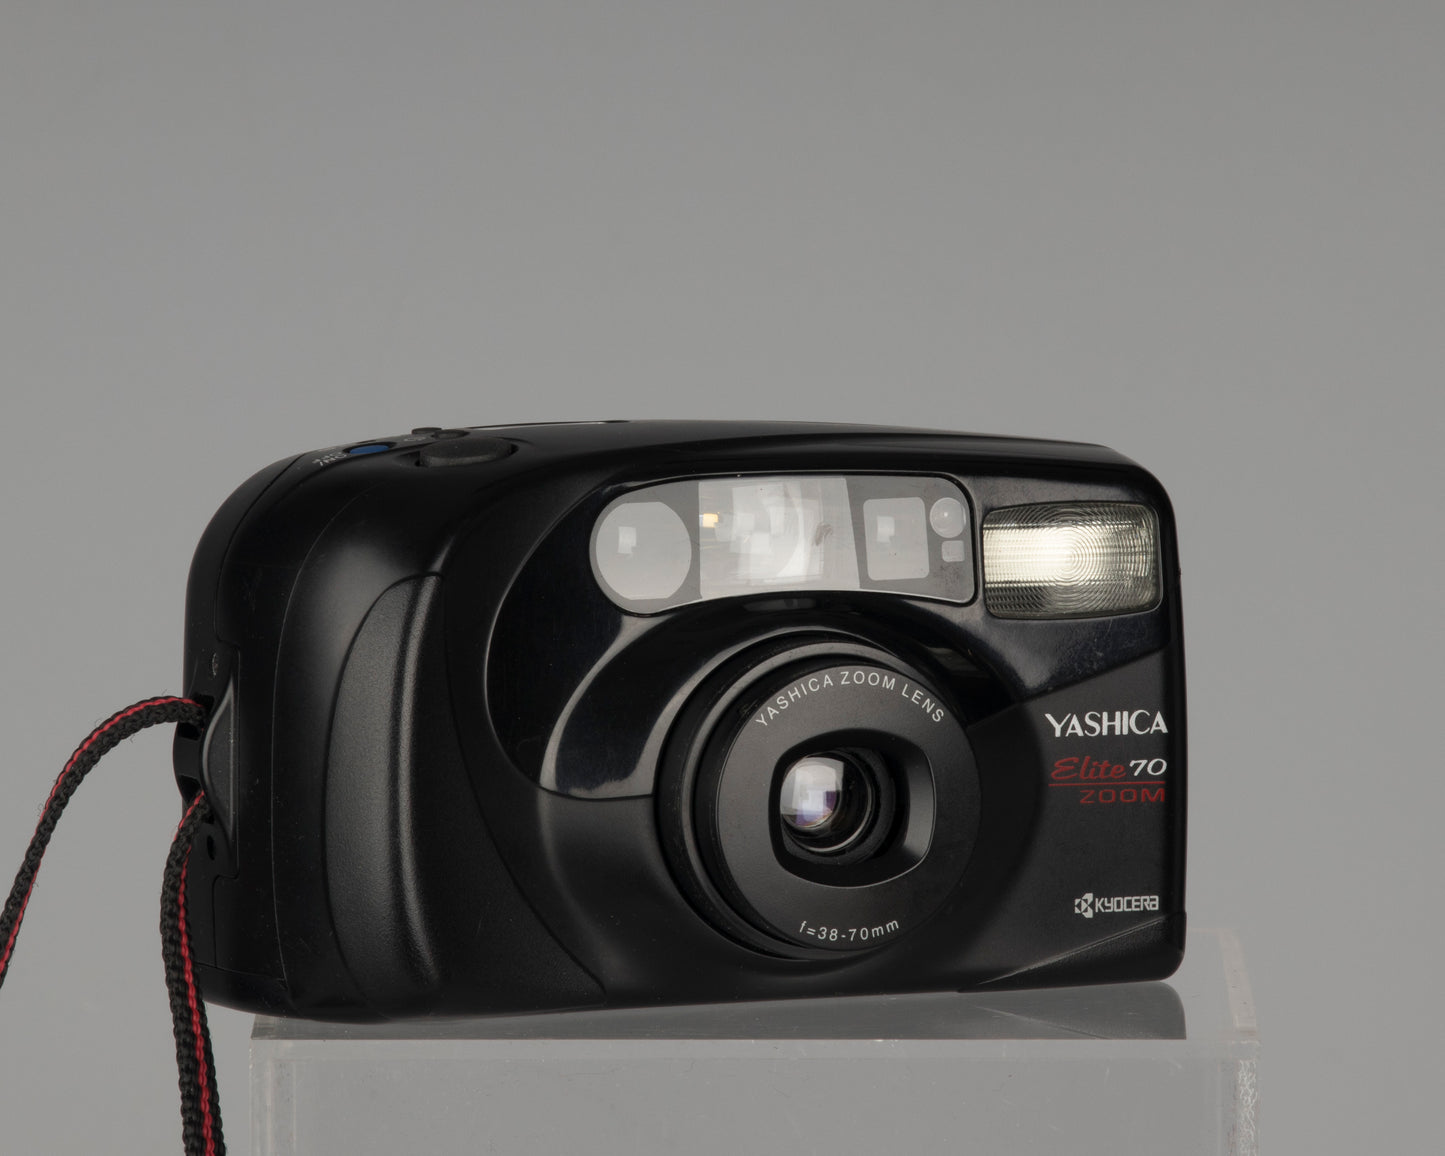 Yashica Eite Zoom 70 35mm film camera